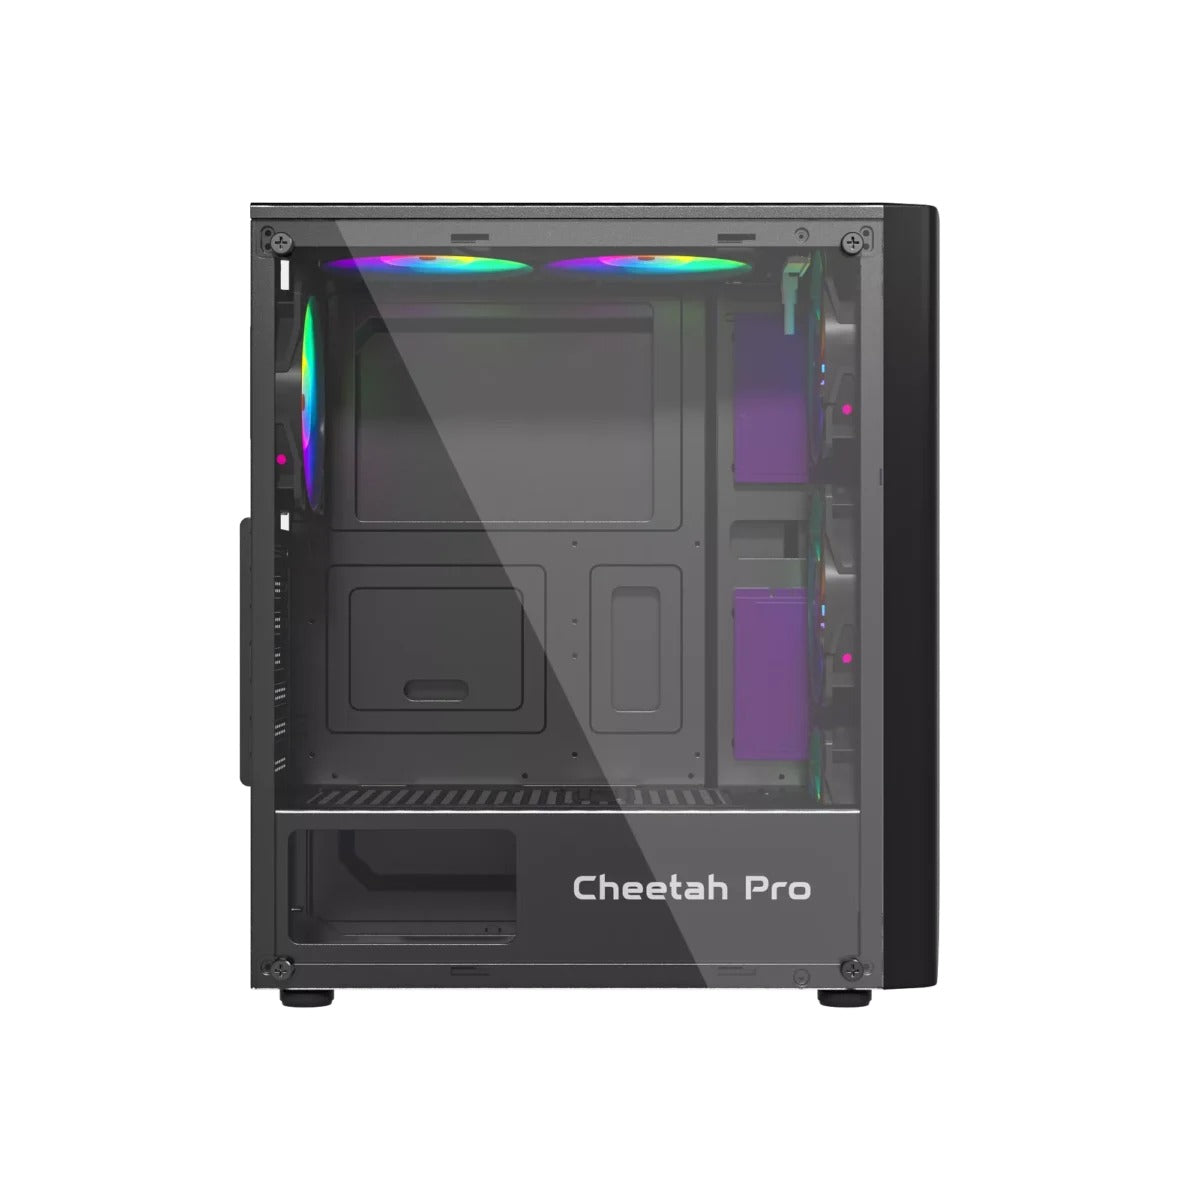 Boost Cheetah Pro Black Color PC Case Price in Pakistan